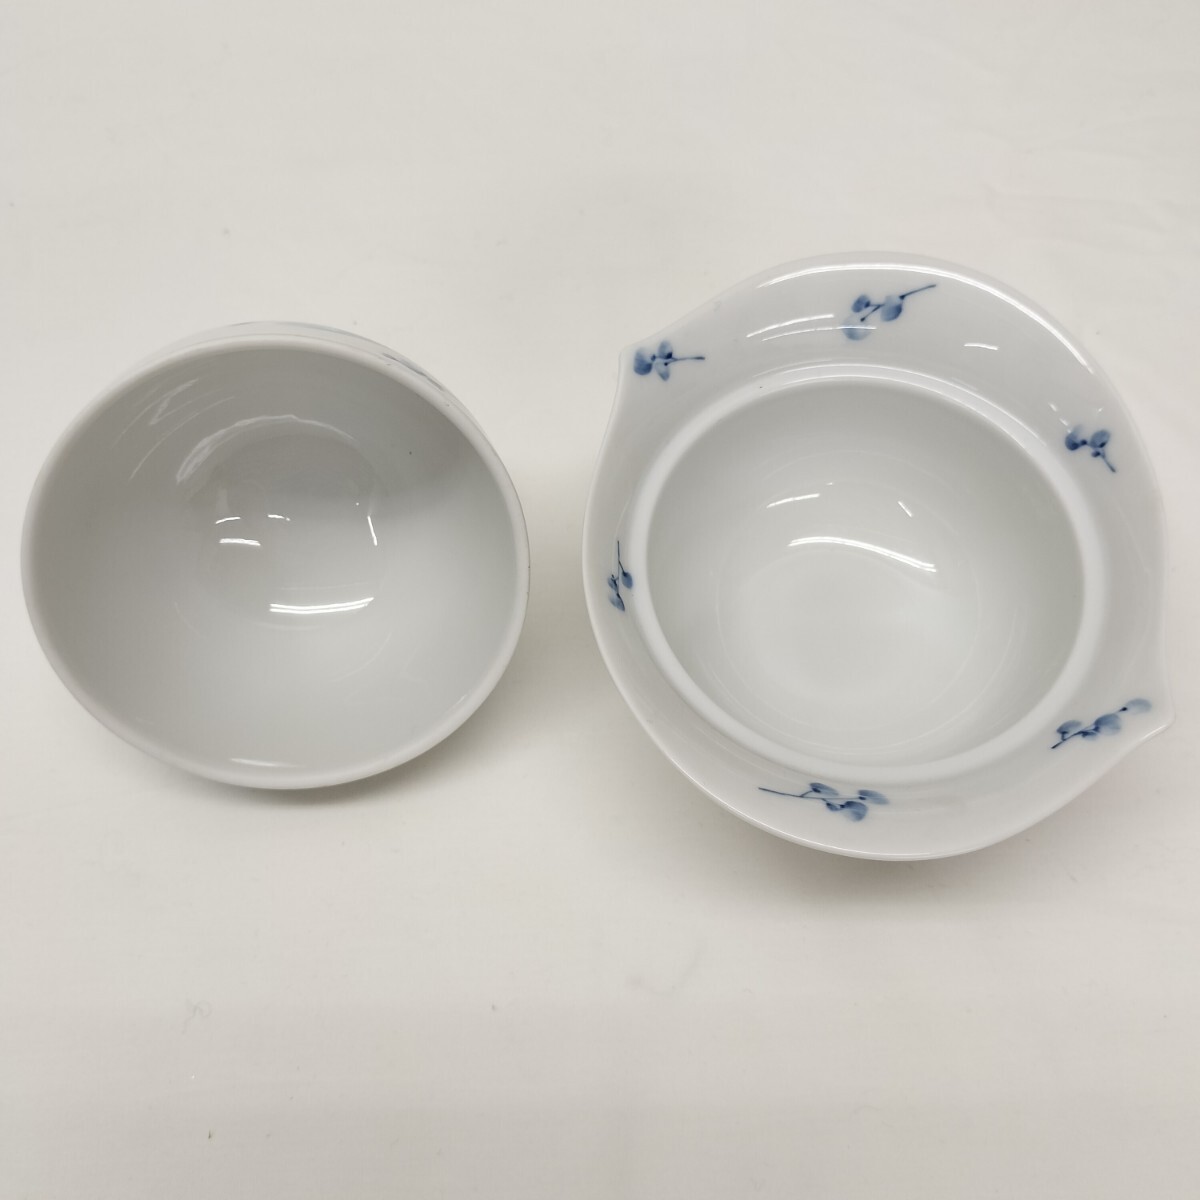 【A-152】MEISSEN マイセン 青い花 シュガーポット 1点 茶器 ブランド食器 テーブルウェア ホワイト 花柄 箱付き_画像7